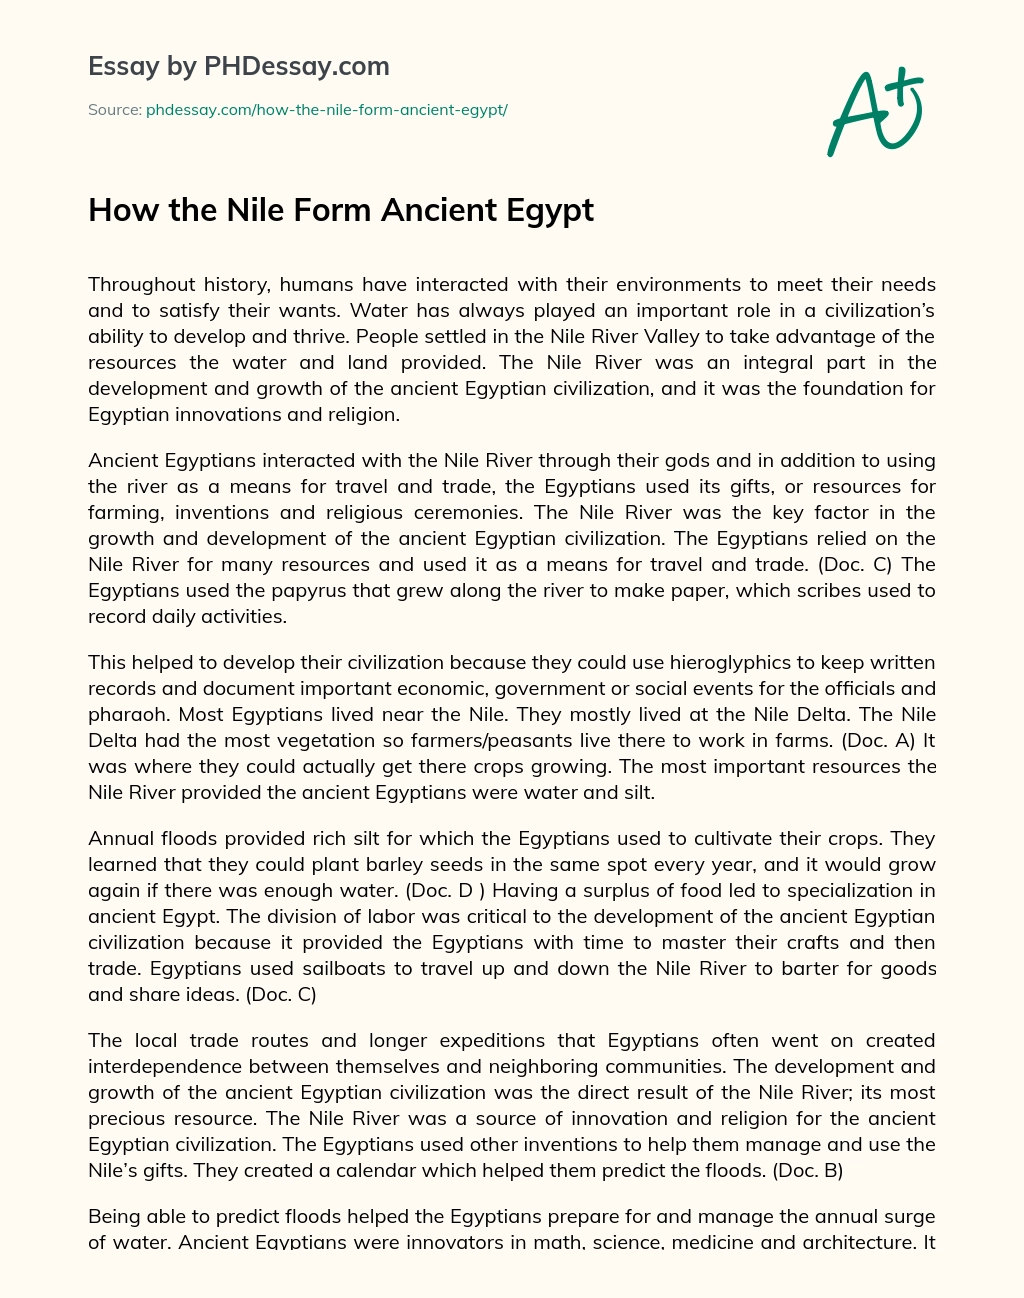 How the Nile Form Ancient Egypt essay